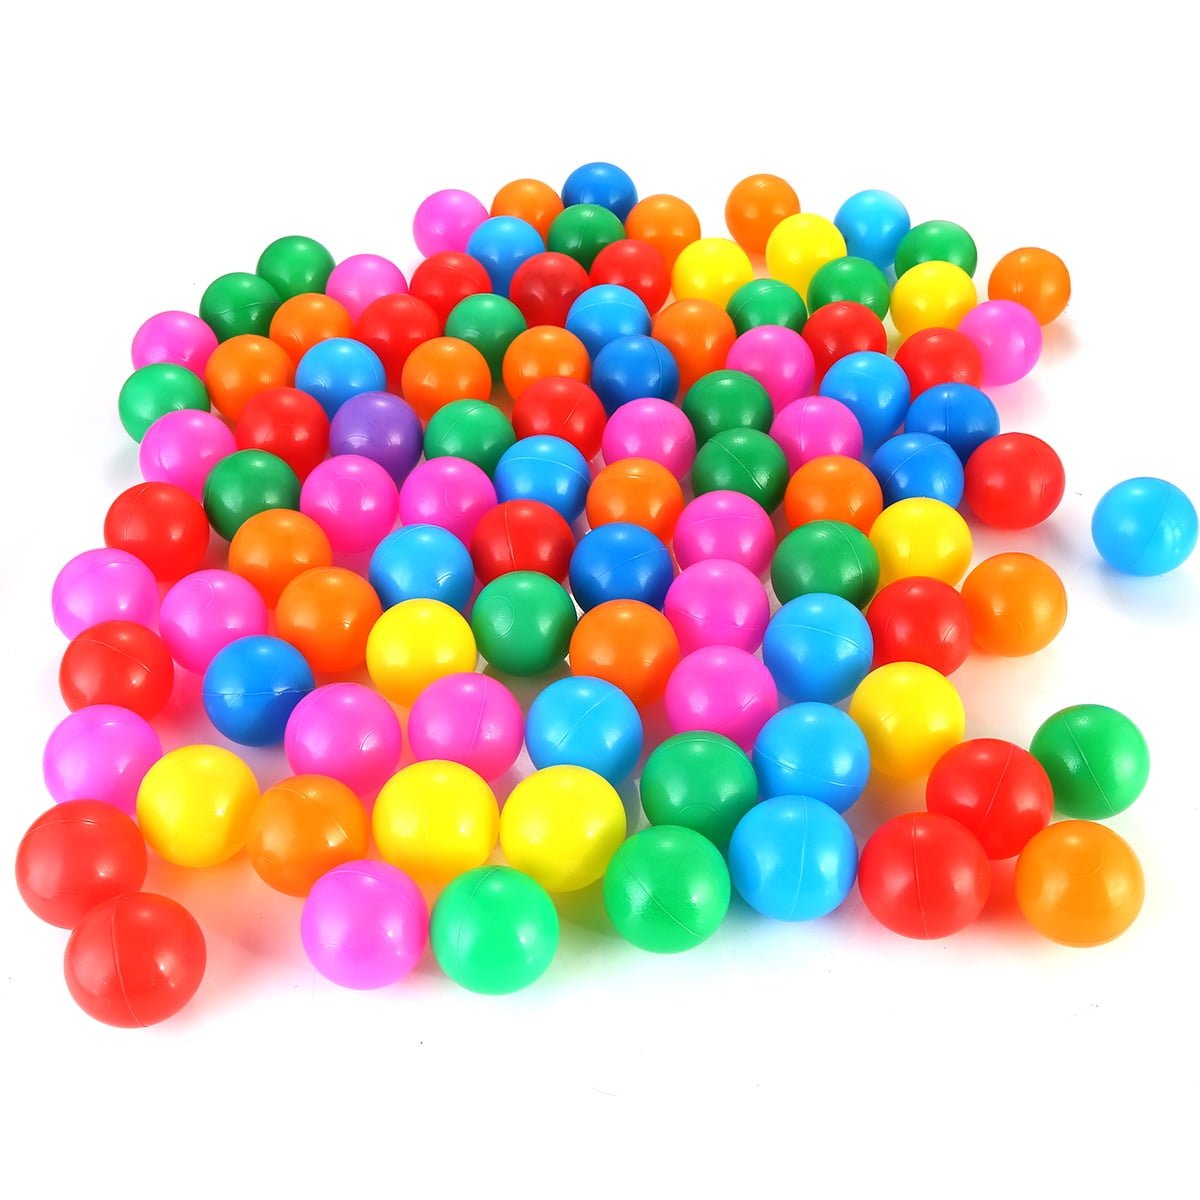 7 CM Plastic Pit Balls For Child Kids Multi Coloured Ocean Play Ball T8U9 U5M6 